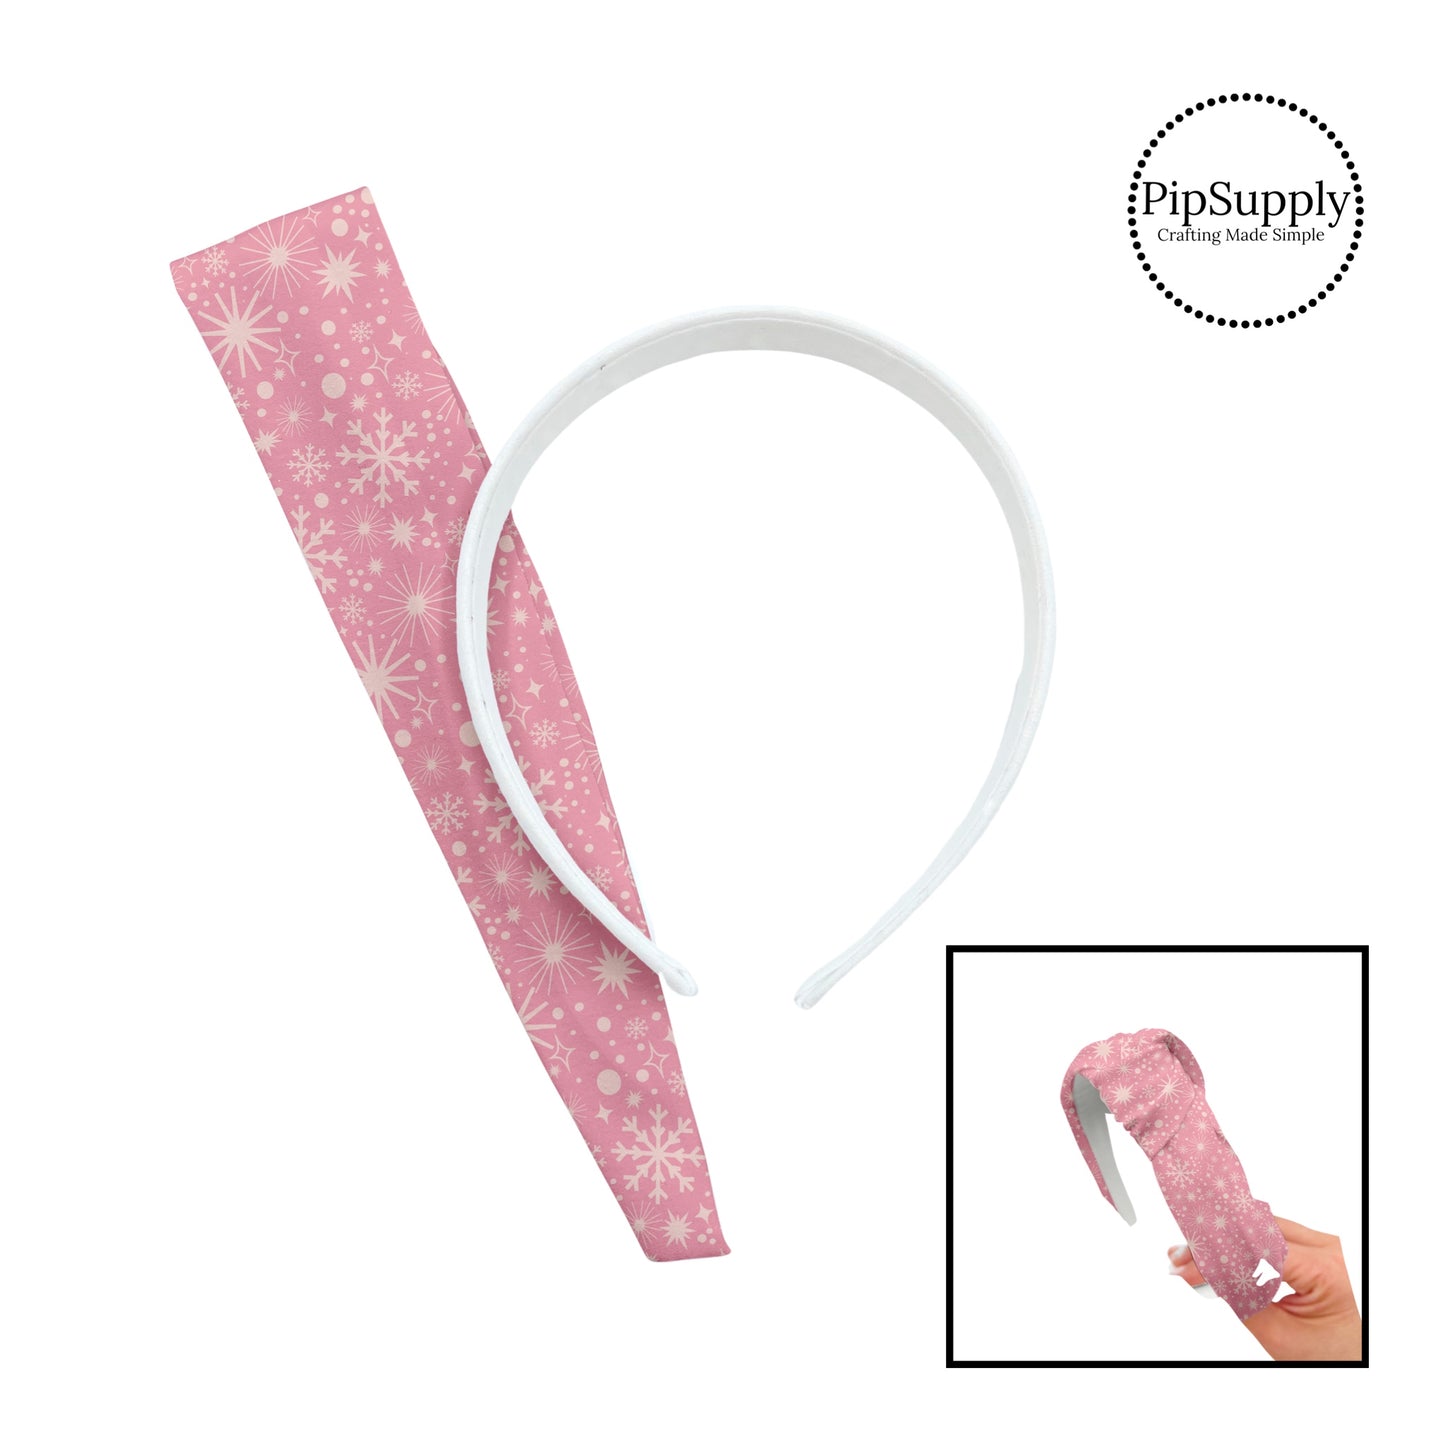 Light pink snowflakes on pink knotted headband kit